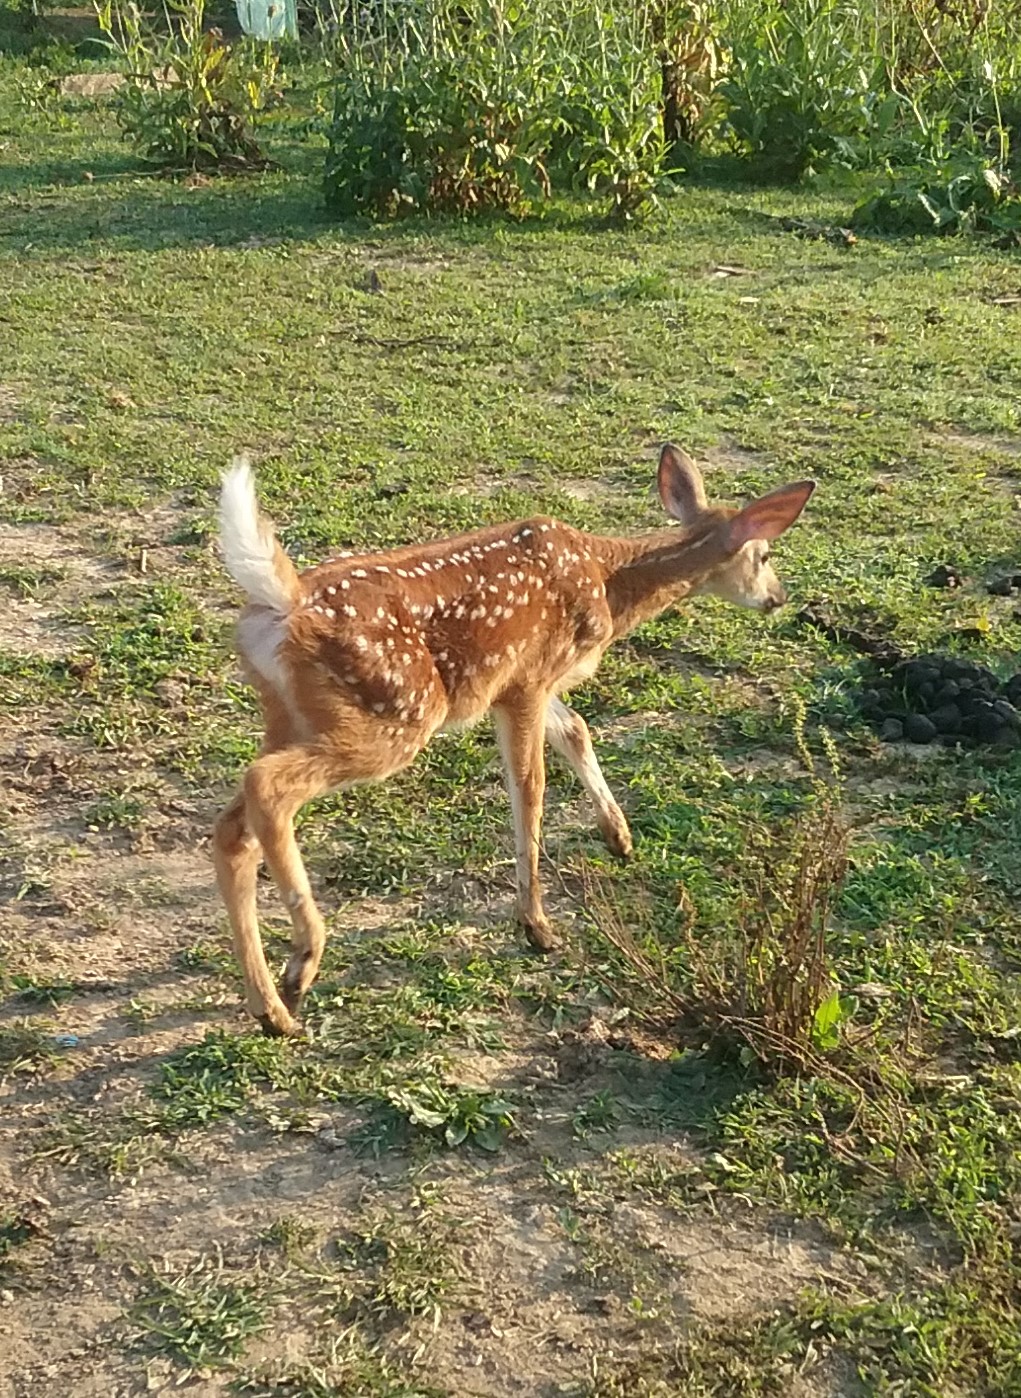 newborn deer walking